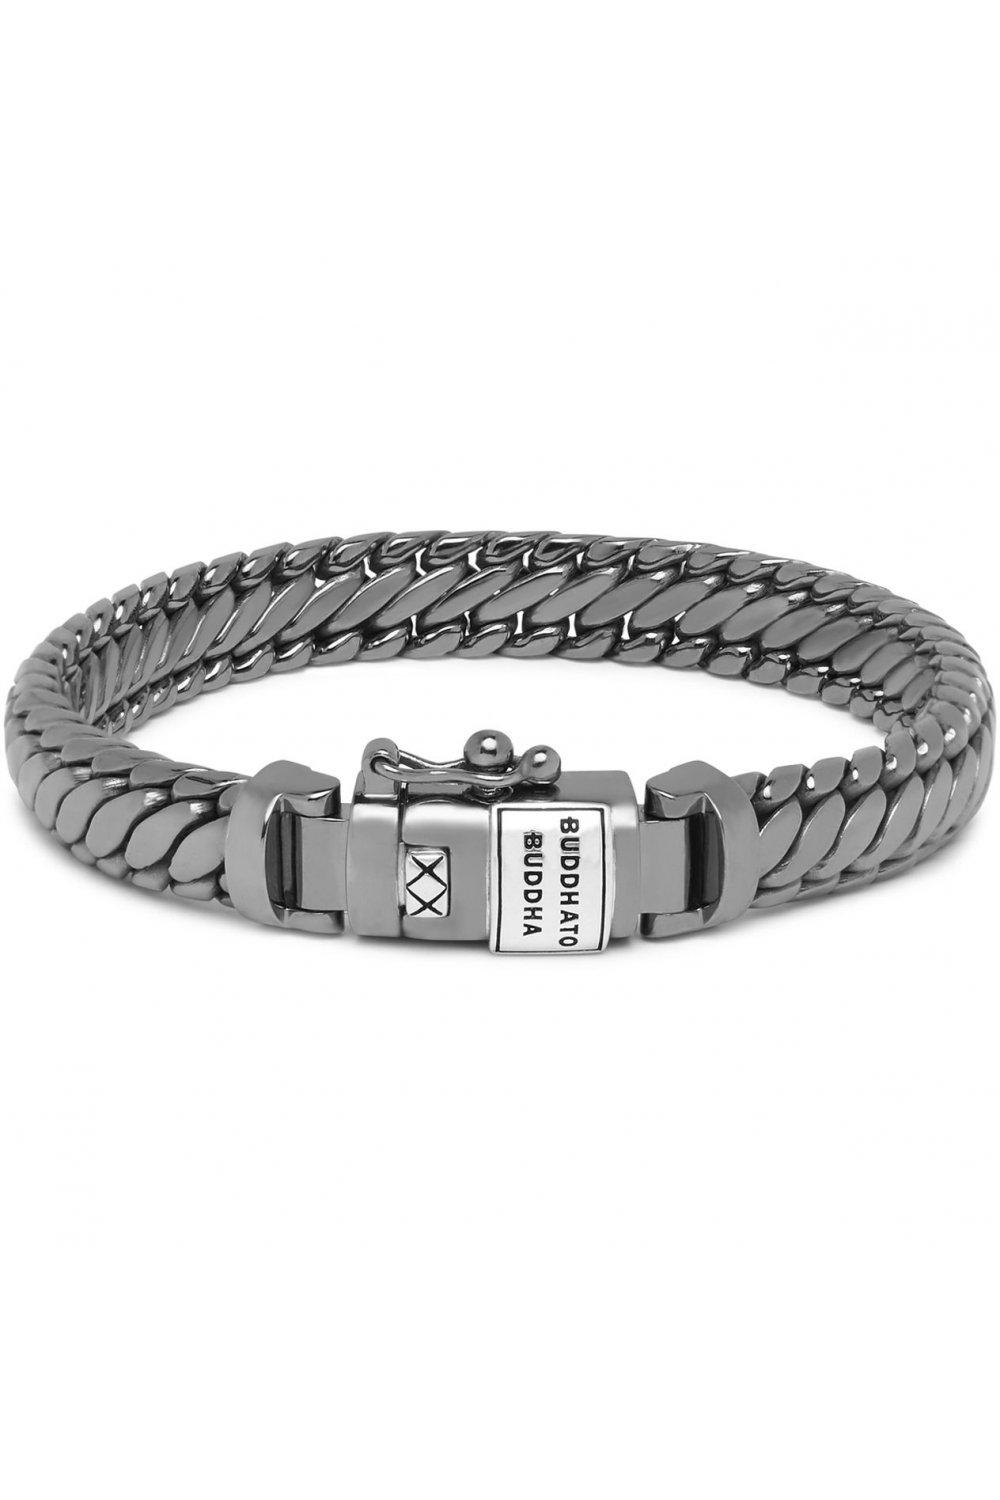 sterling silver fashion bracelet - 001k01070d806